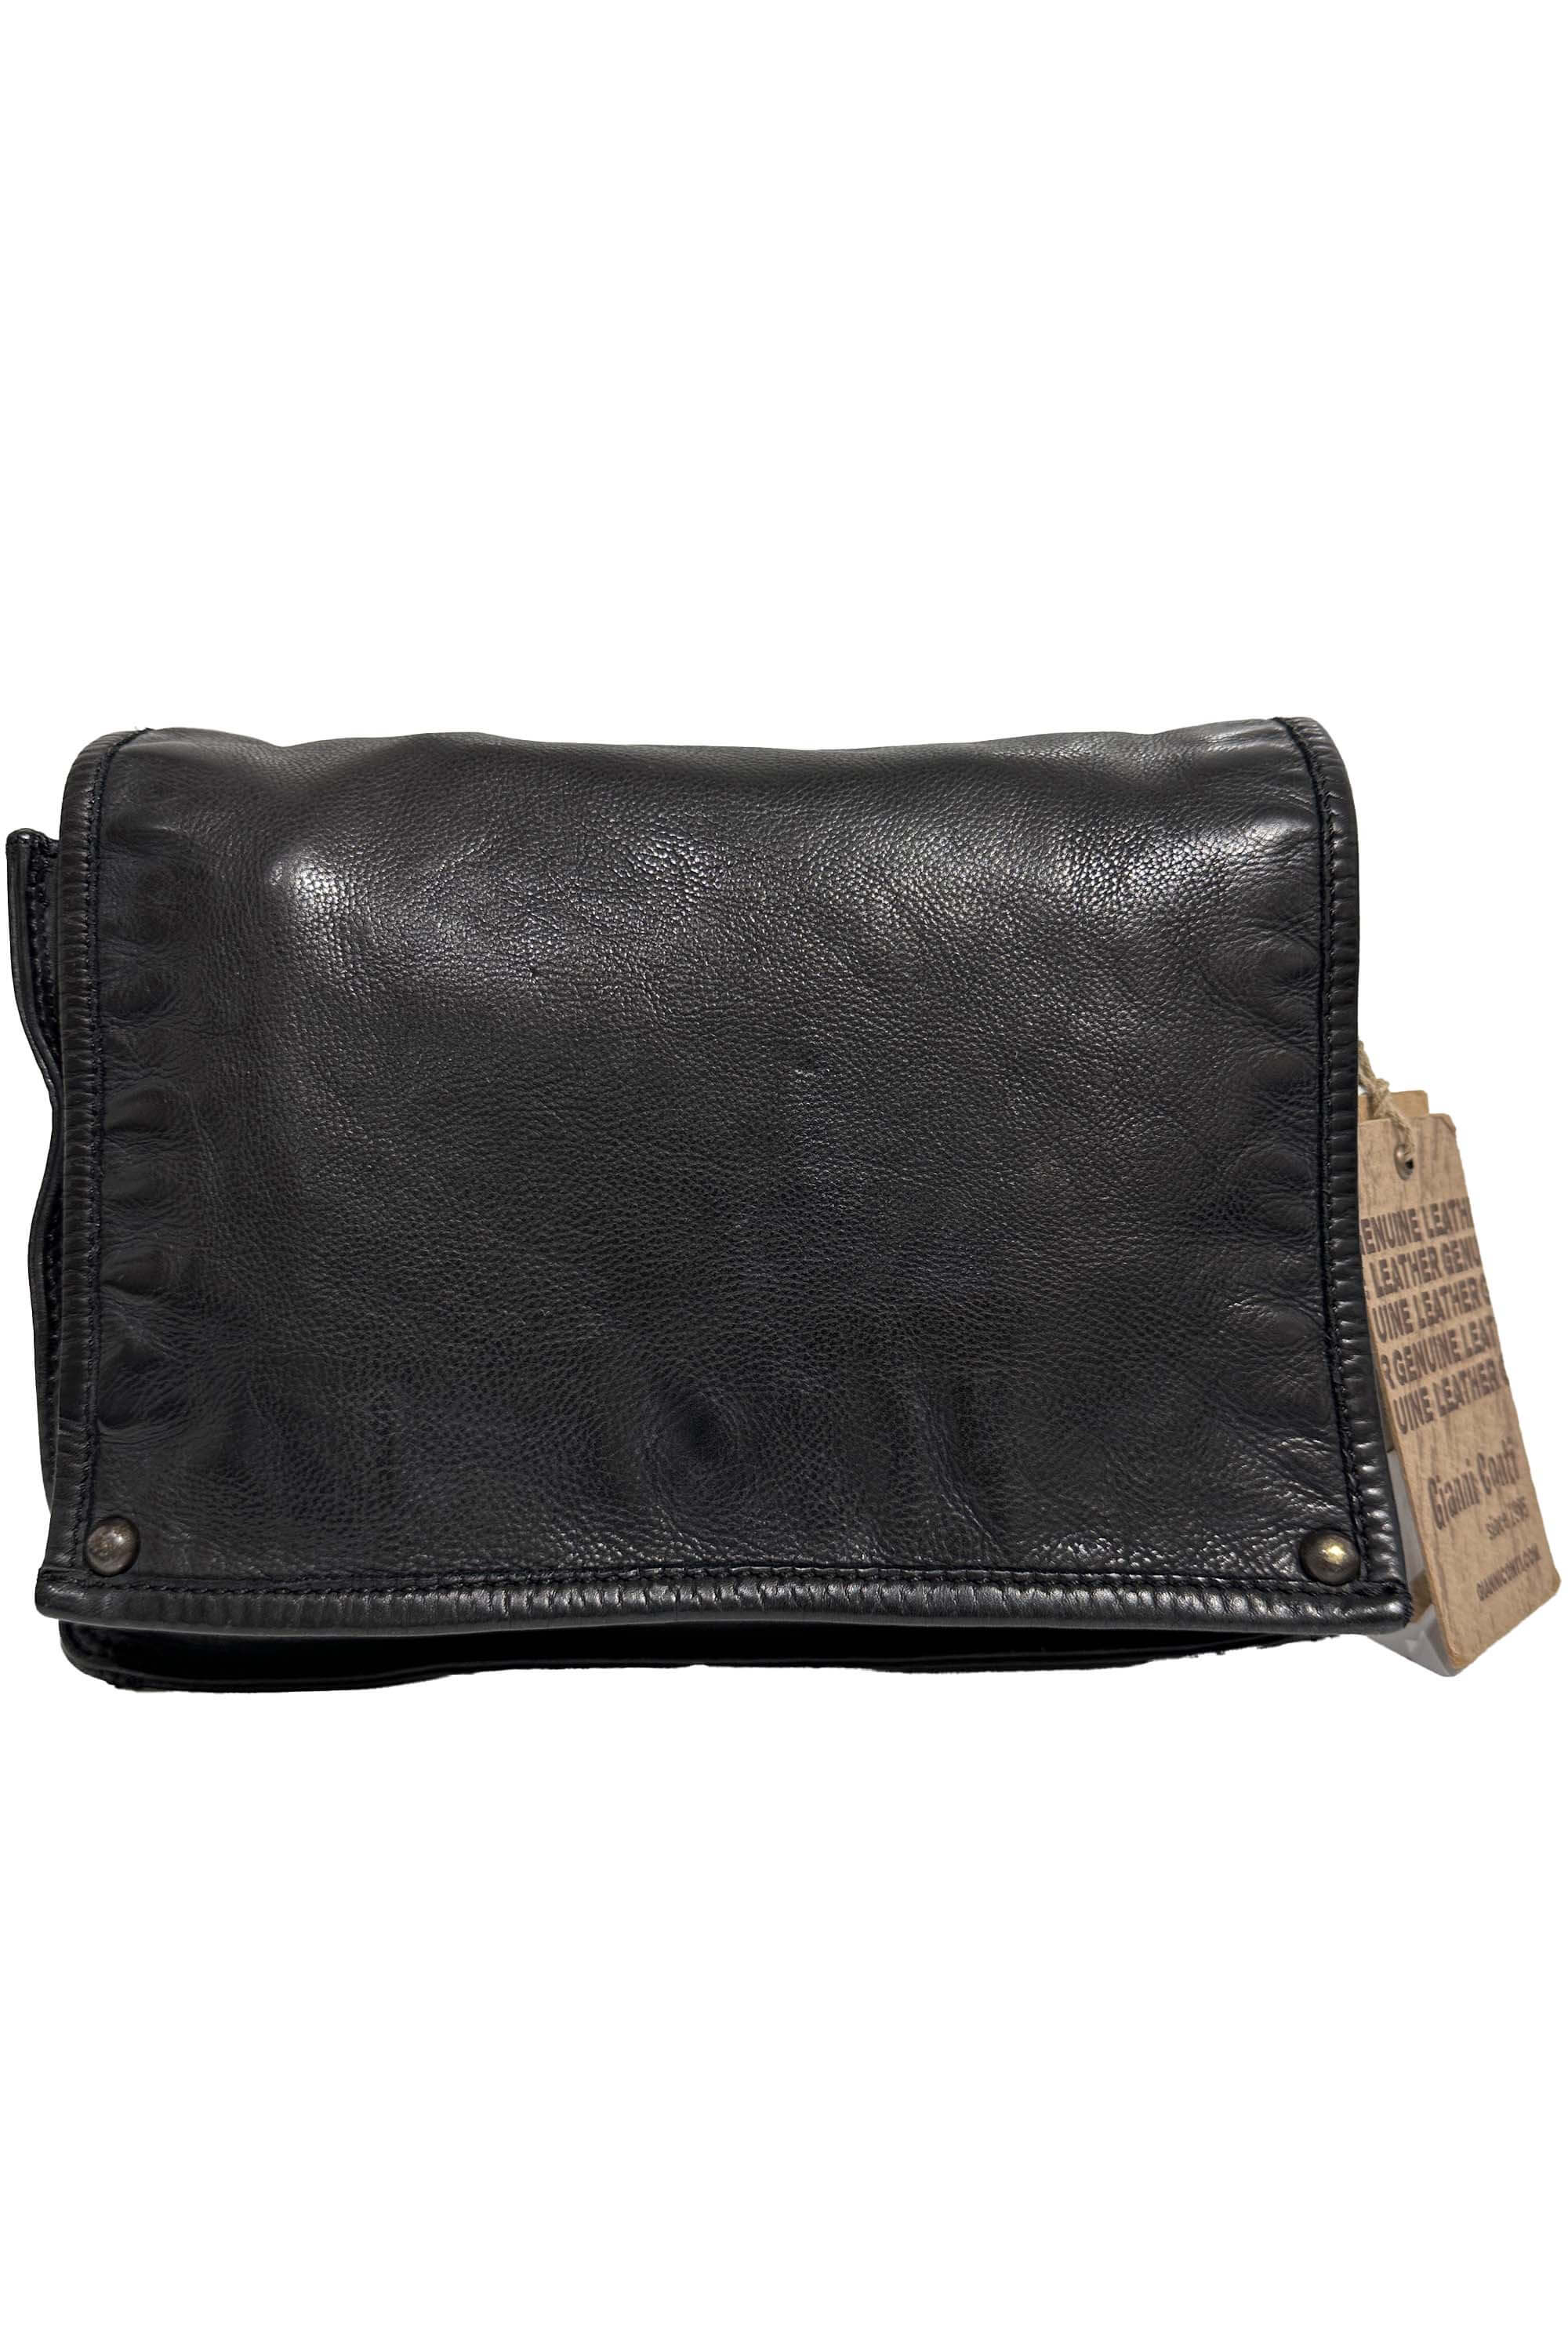 Gianni Conti Leather 3390 Black Bag